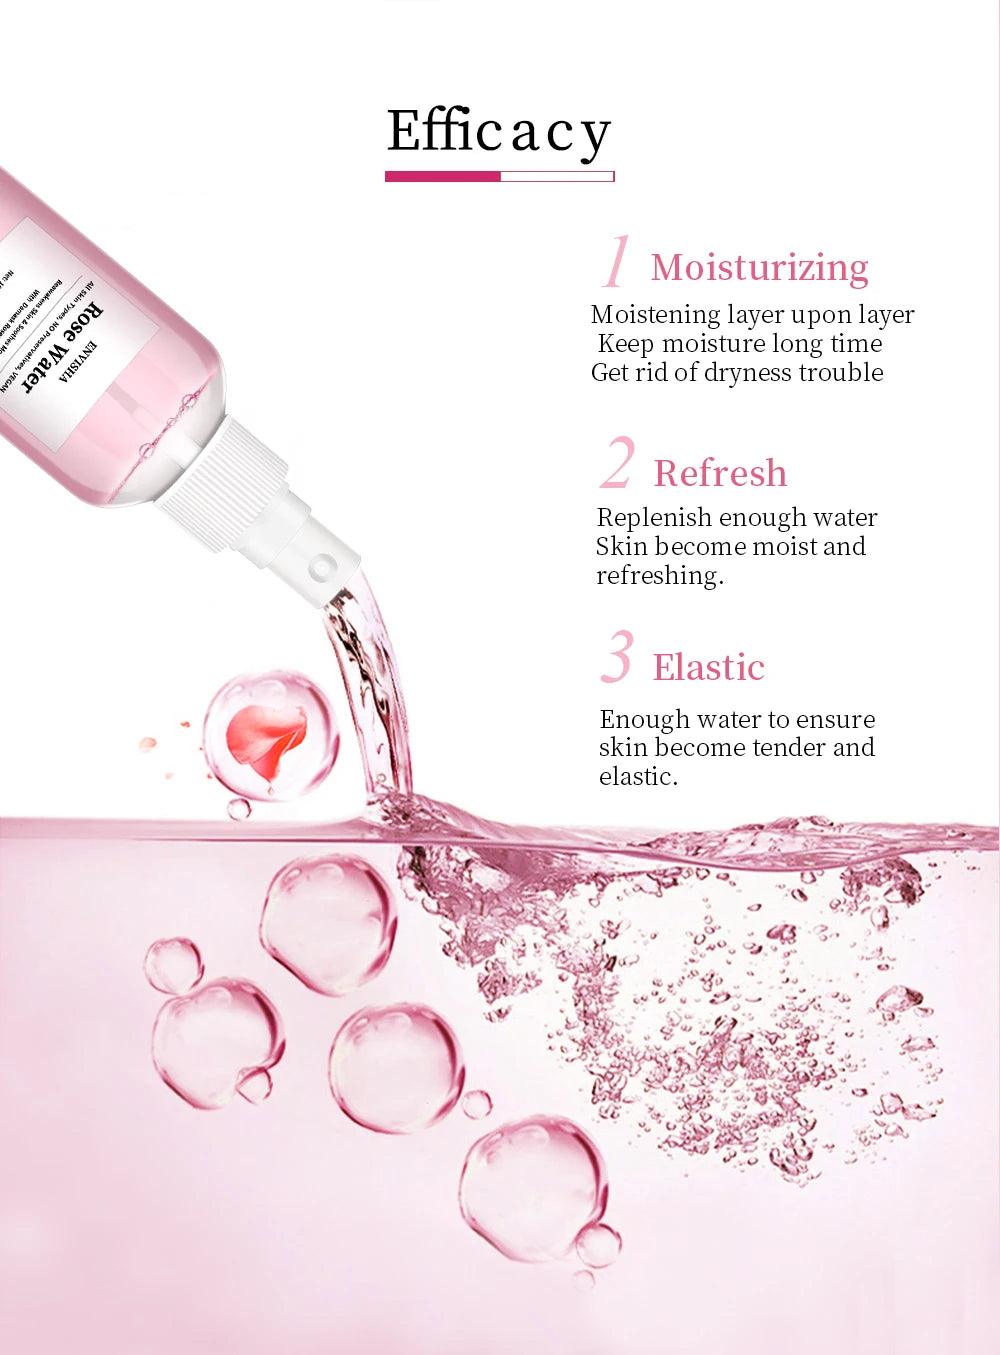 ENVISHA Rose Water: Organic Petal Essence. Moisturizing Toner, Elastic Skin Care.